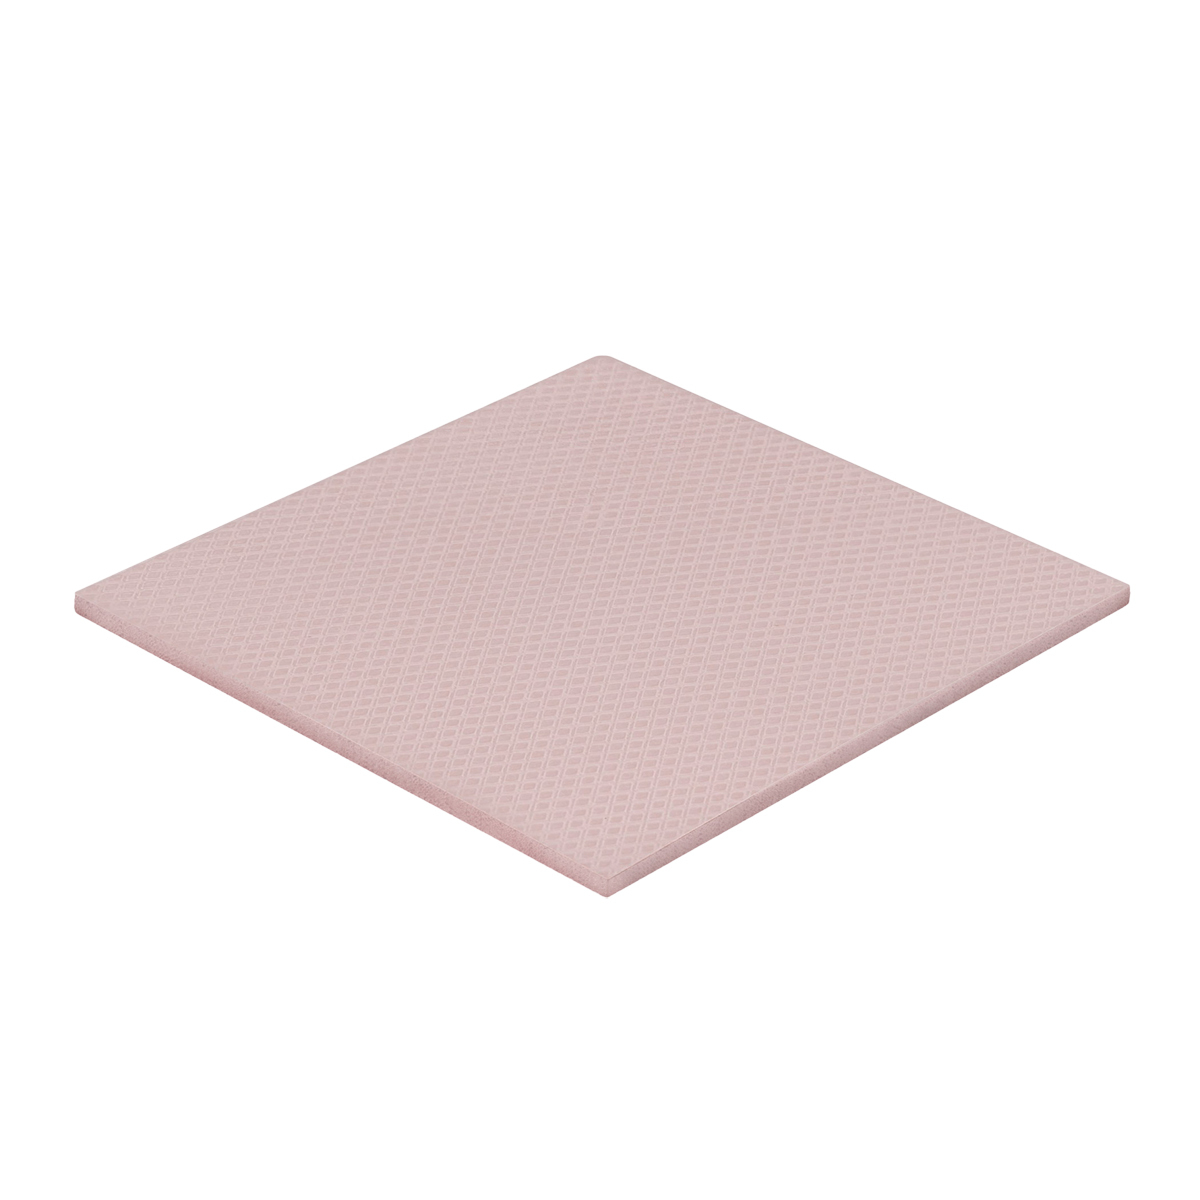 Thermal Grizzly Minus Pad 8 (100 x 100 x 2,0 mm) | Wärmeleitpad von THERMAL GRIZZLY